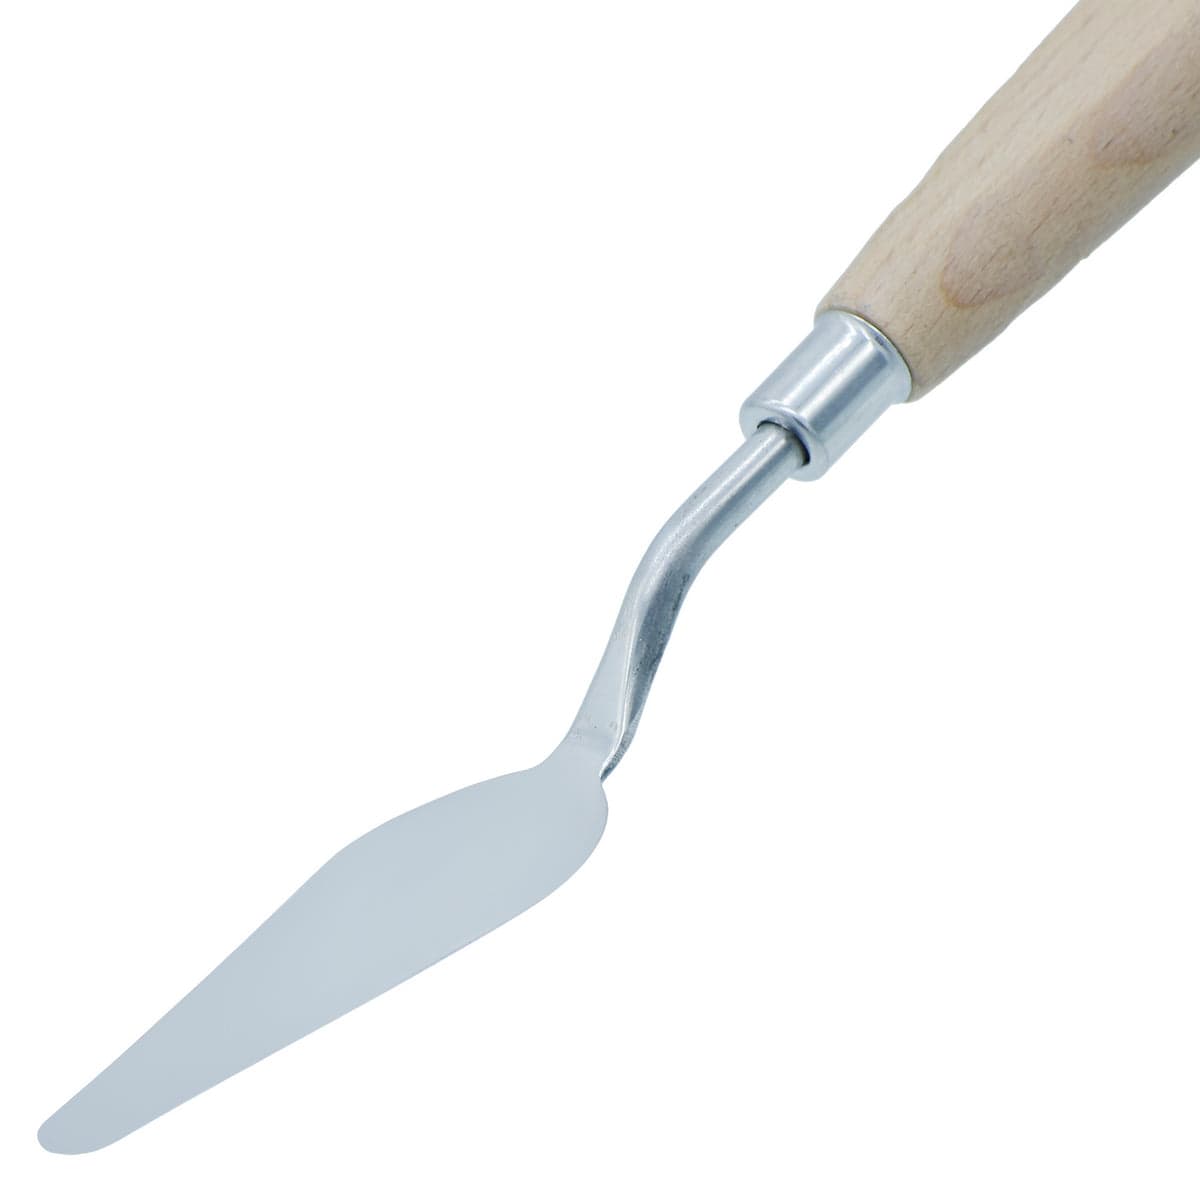 jags-mumbai Knife & Cutter Wooden Painting Knife 10 WPK-10